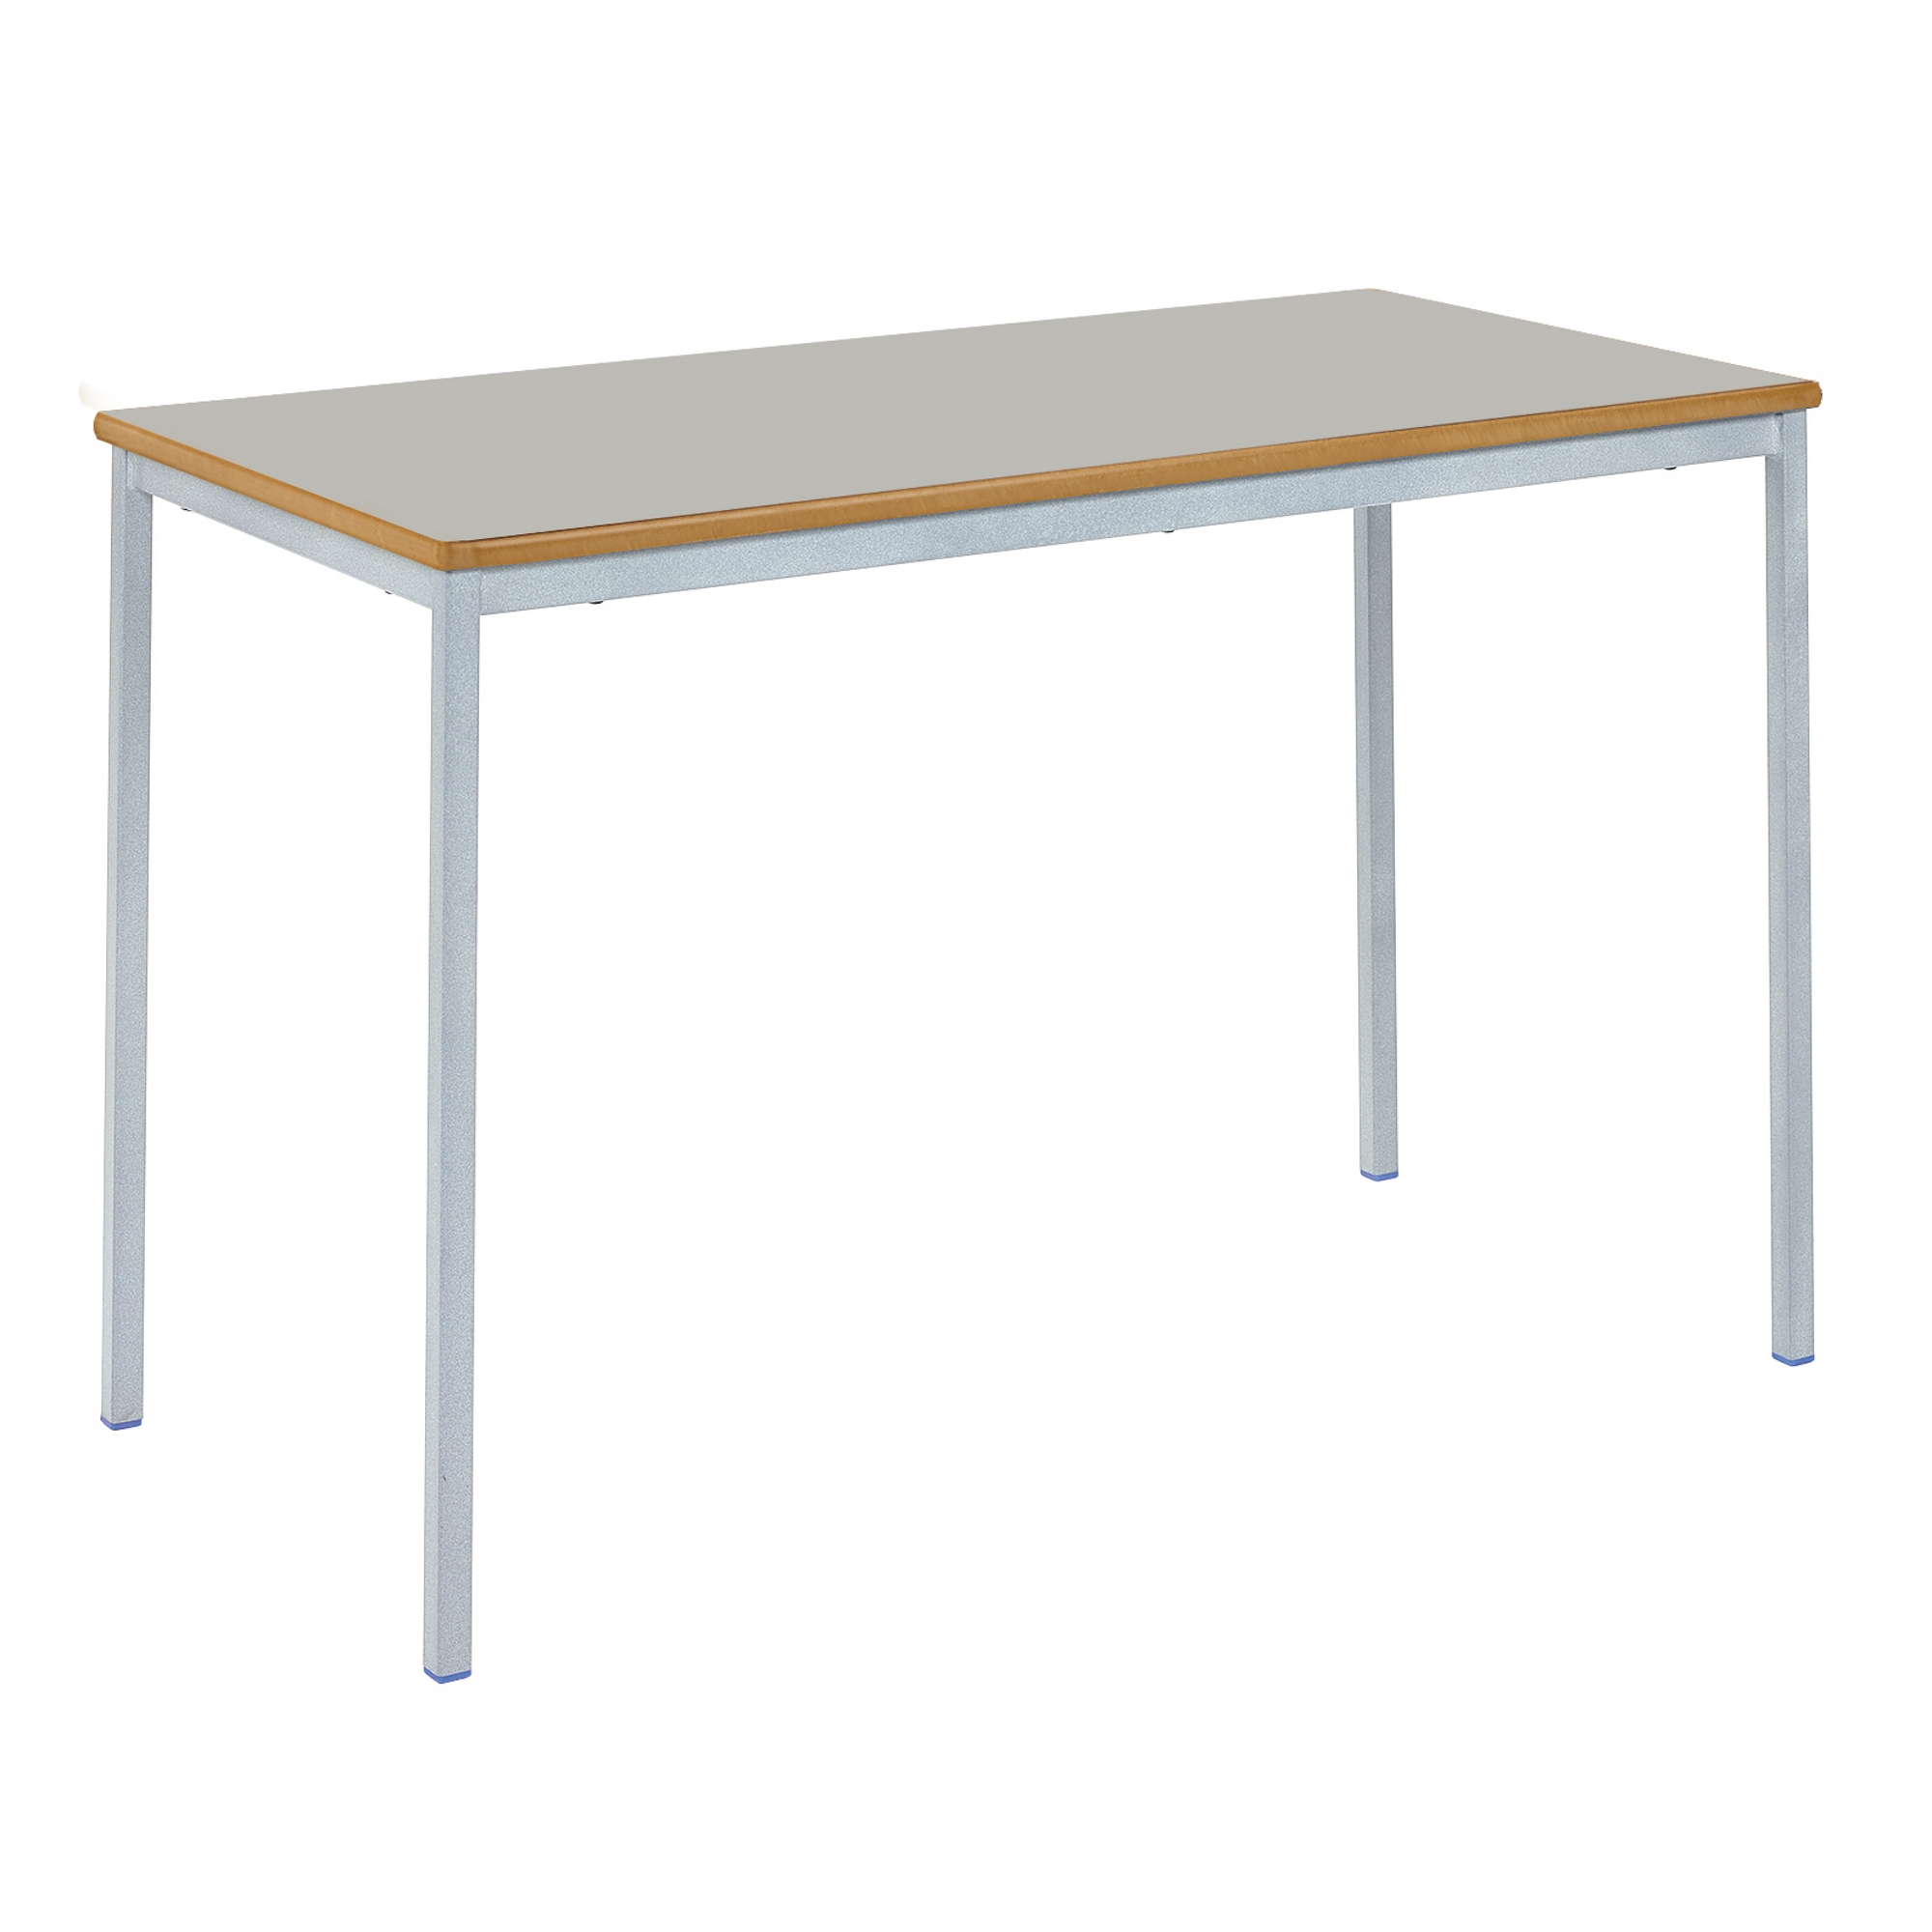 Classmates Rectangular Fully Welded Classroom Table - 1100 x 550 x 530mm - Grey